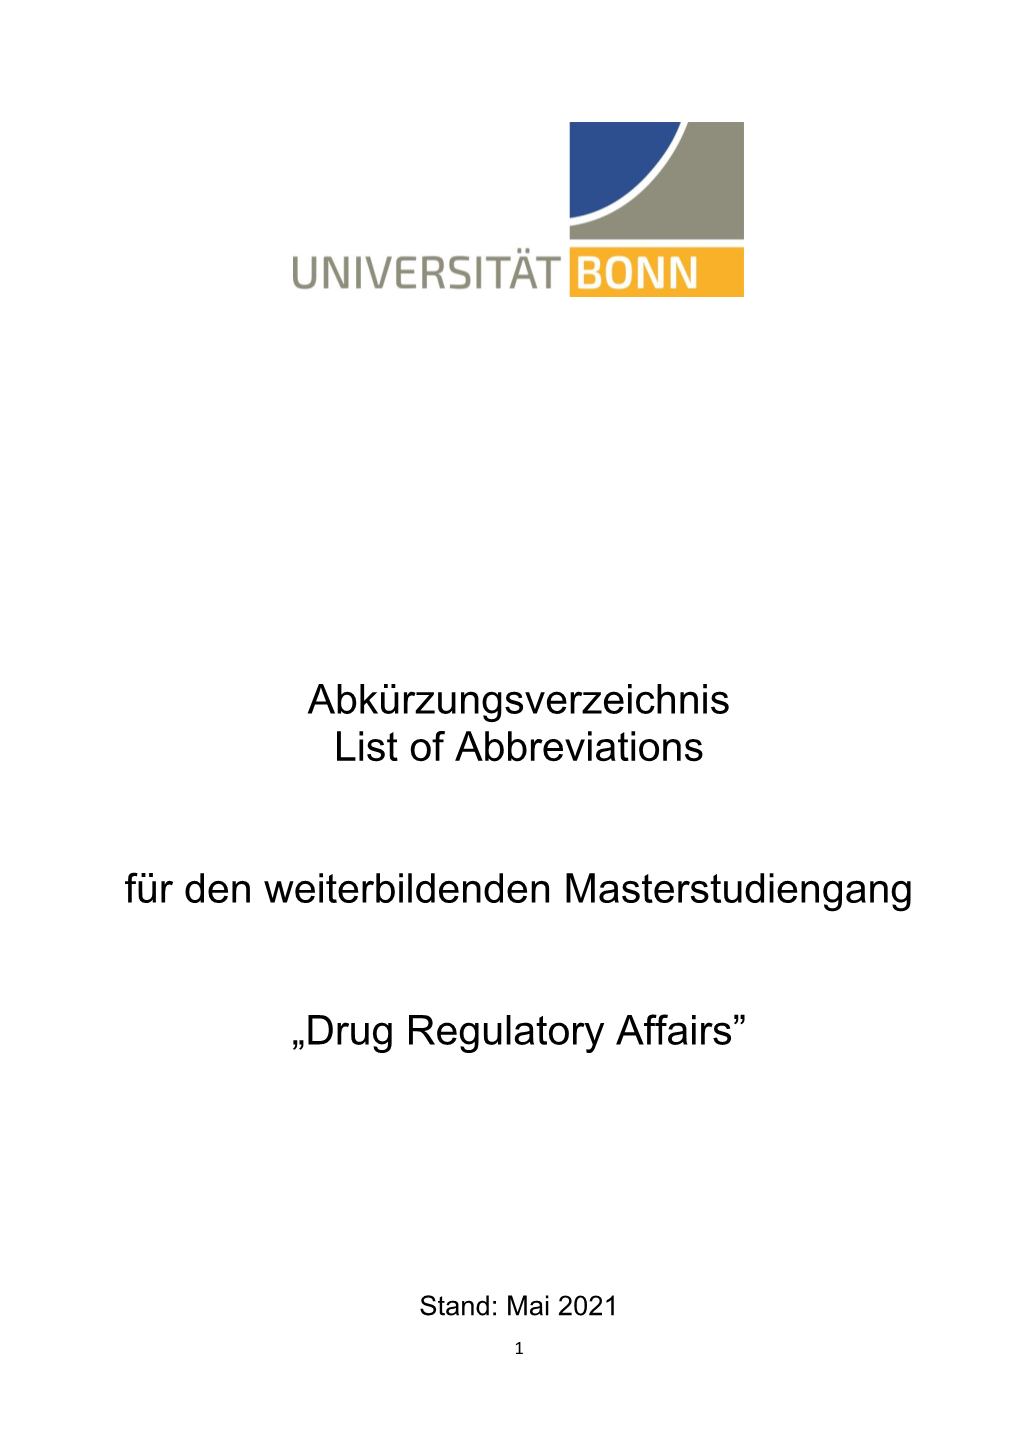 Drug Regulatory Affairs”